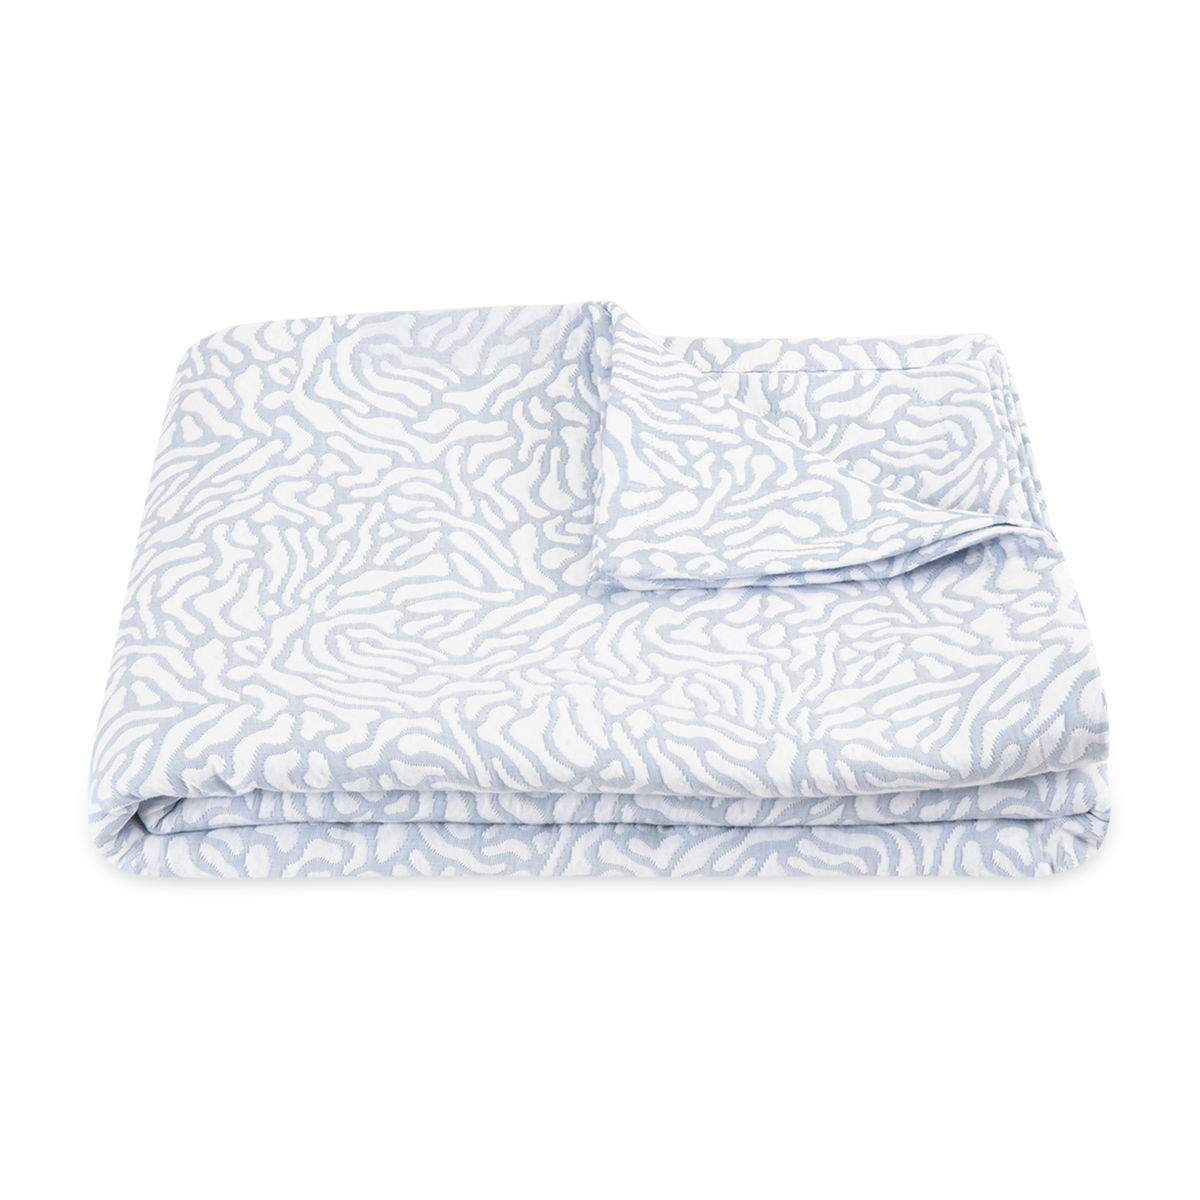 Folded Duvet Cover of Matouk Schumacher Cora Bedding in Blue White Color